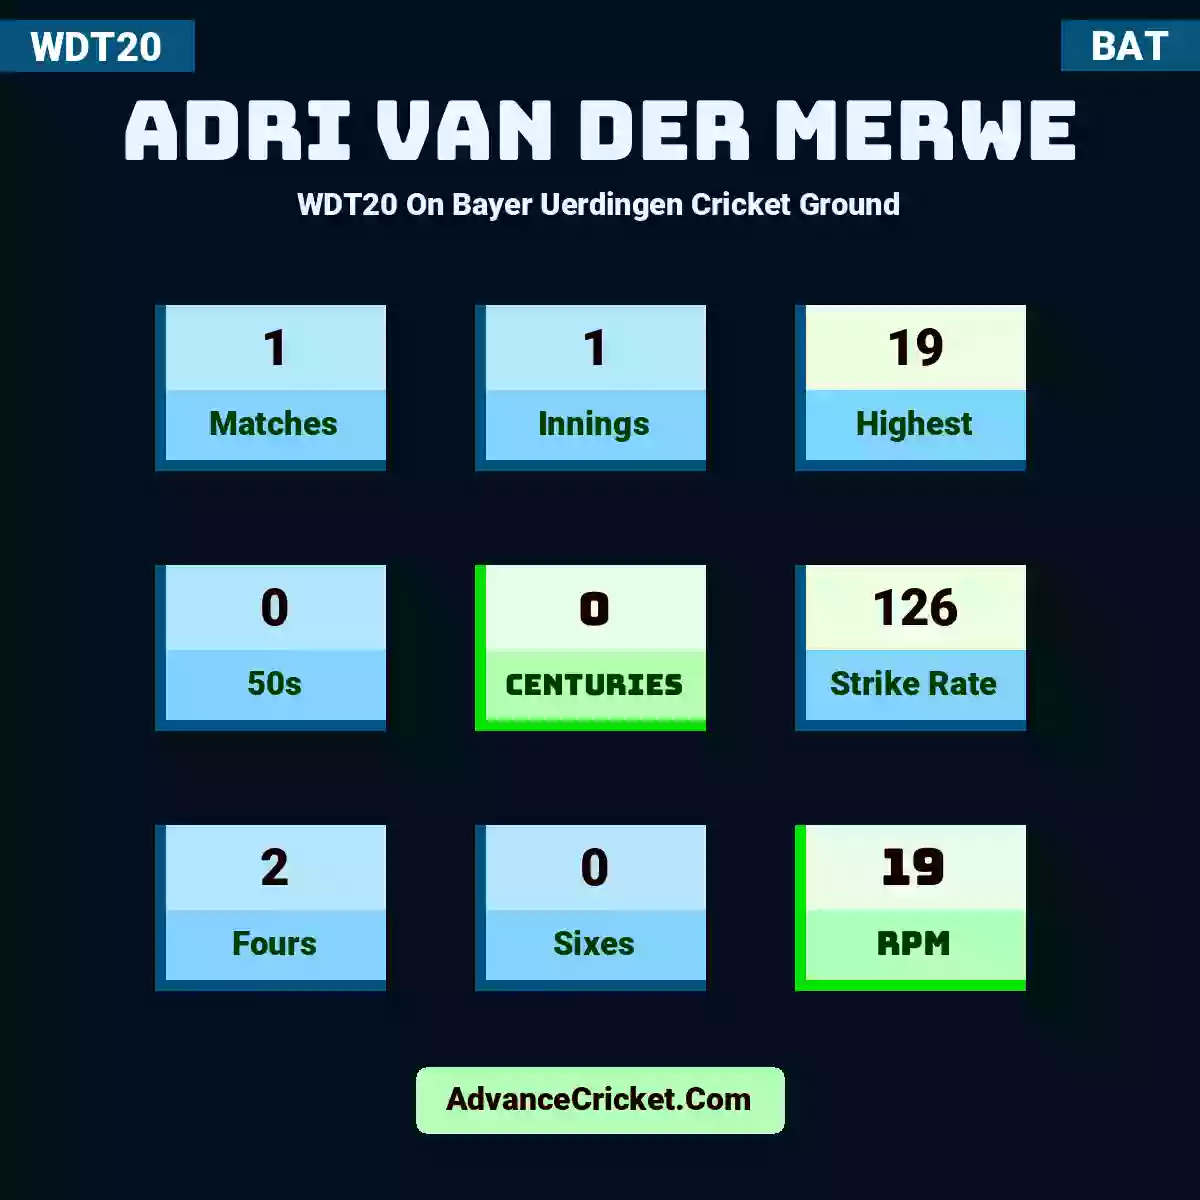 Adri van der Merwe WDT20  On Bayer Uerdingen Cricket Ground, Adri van der Merwe played 1 matches, scored 19 runs as highest, 0 half-centuries, and 0 centuries, with a strike rate of 126. A.Merwe hit 2 fours and 0 sixes, with an RPM of 19.